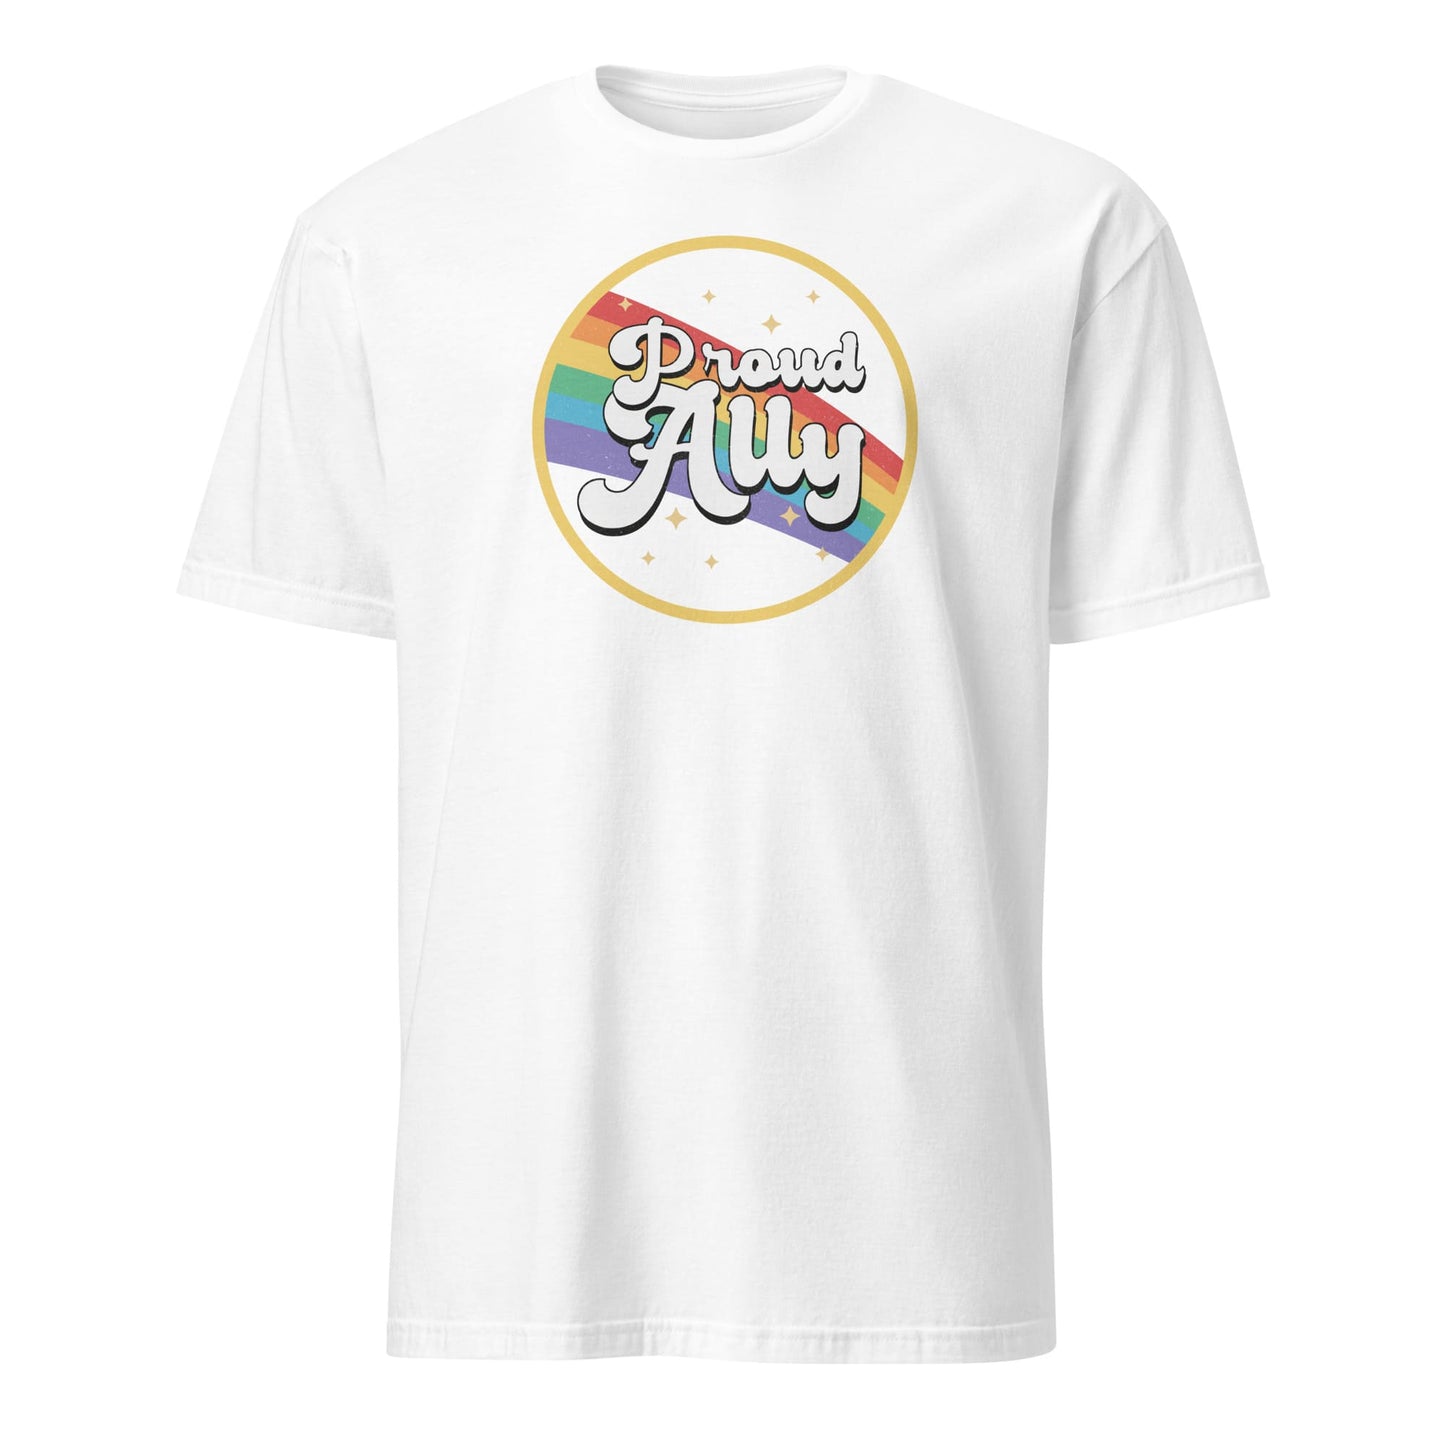 LGBT ally shirt, white